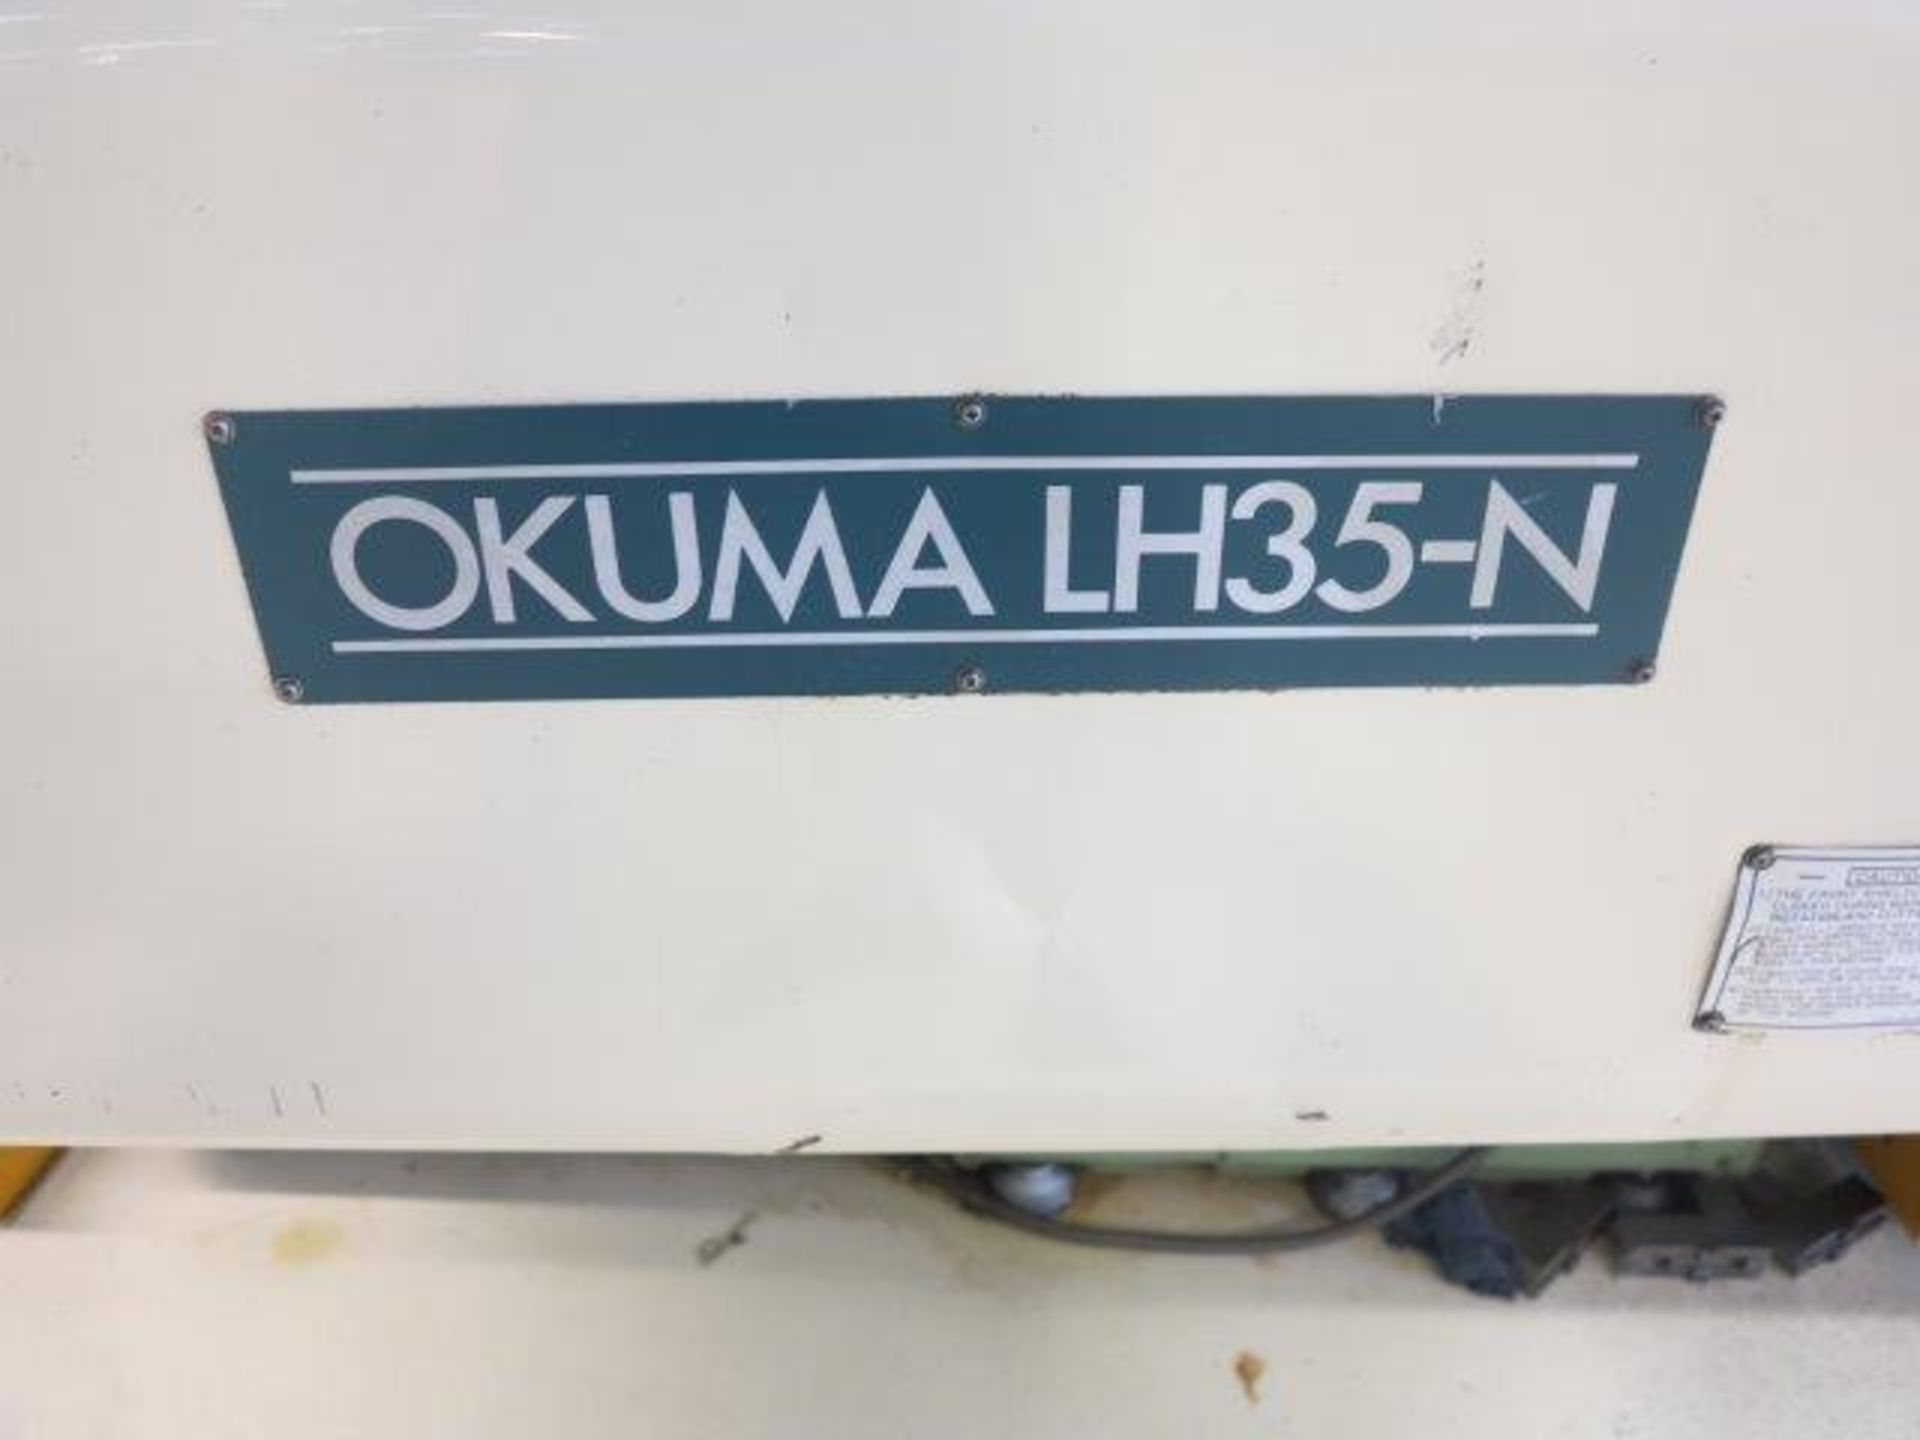 OKUMA LH35-N, OSP 5000L-G CNC CONTROL, 15" KITAGAWA B-15 HYDRAULIC CHUCK (3-JAW), TAILSTOCK & - Image 5 of 12